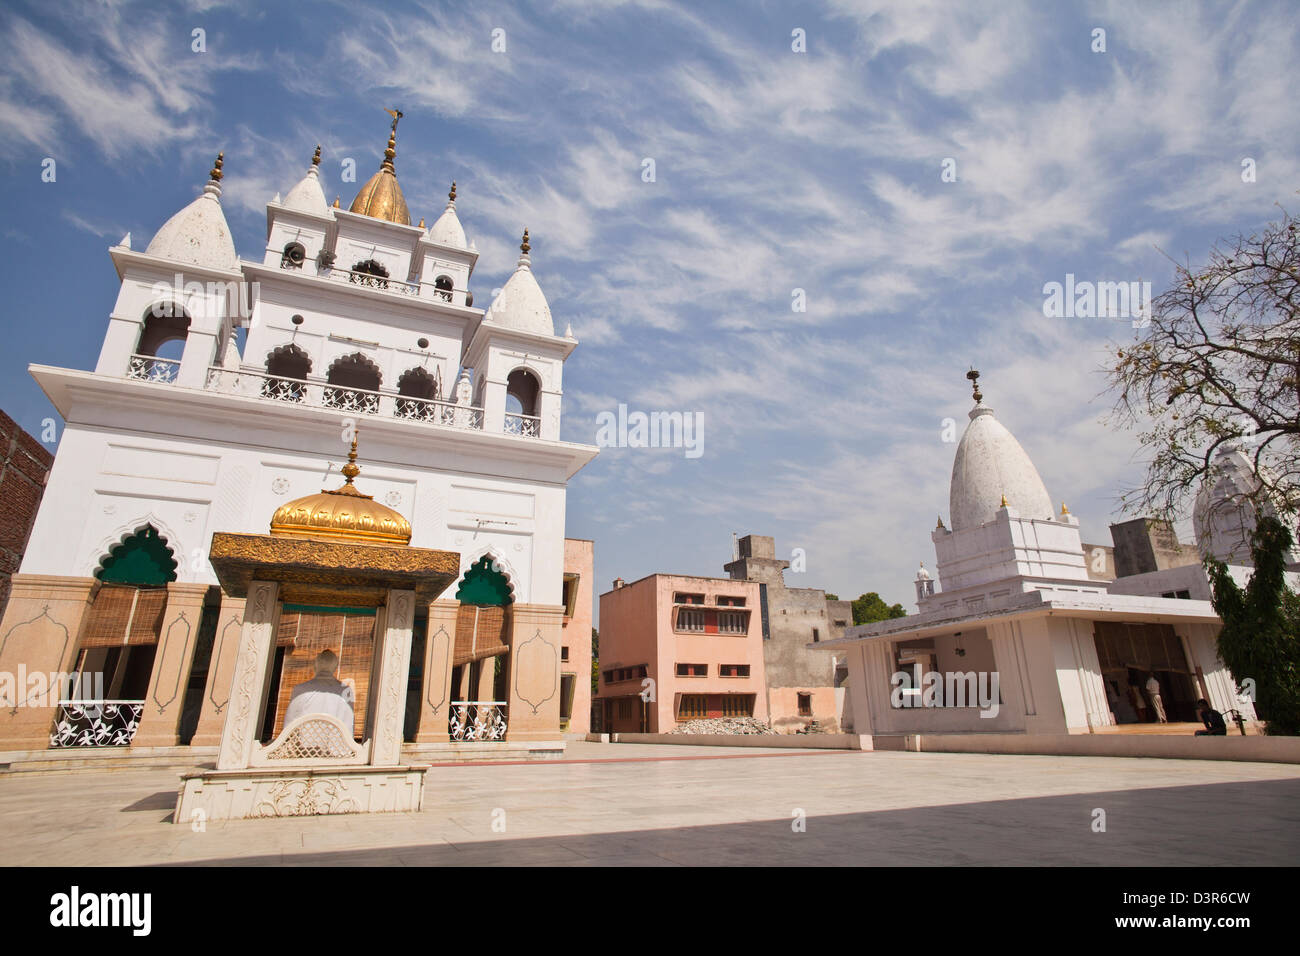 Facciata di un tempio, Bijli Pehalwan Mandir, Amritsar Punjab, India Foto Stock